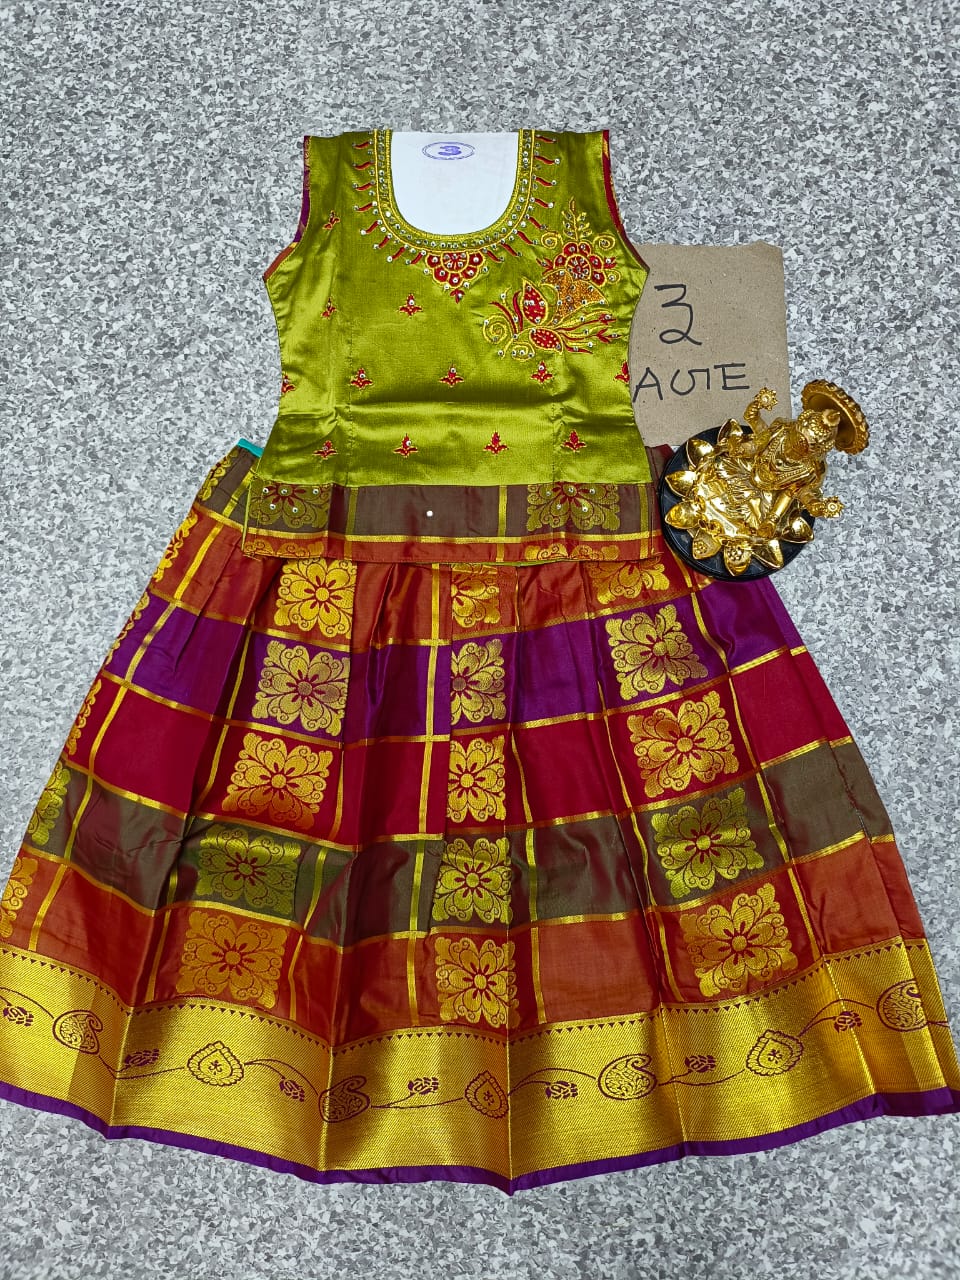 Girls Dresses - Get Stylish Dresses for Girls Online in India